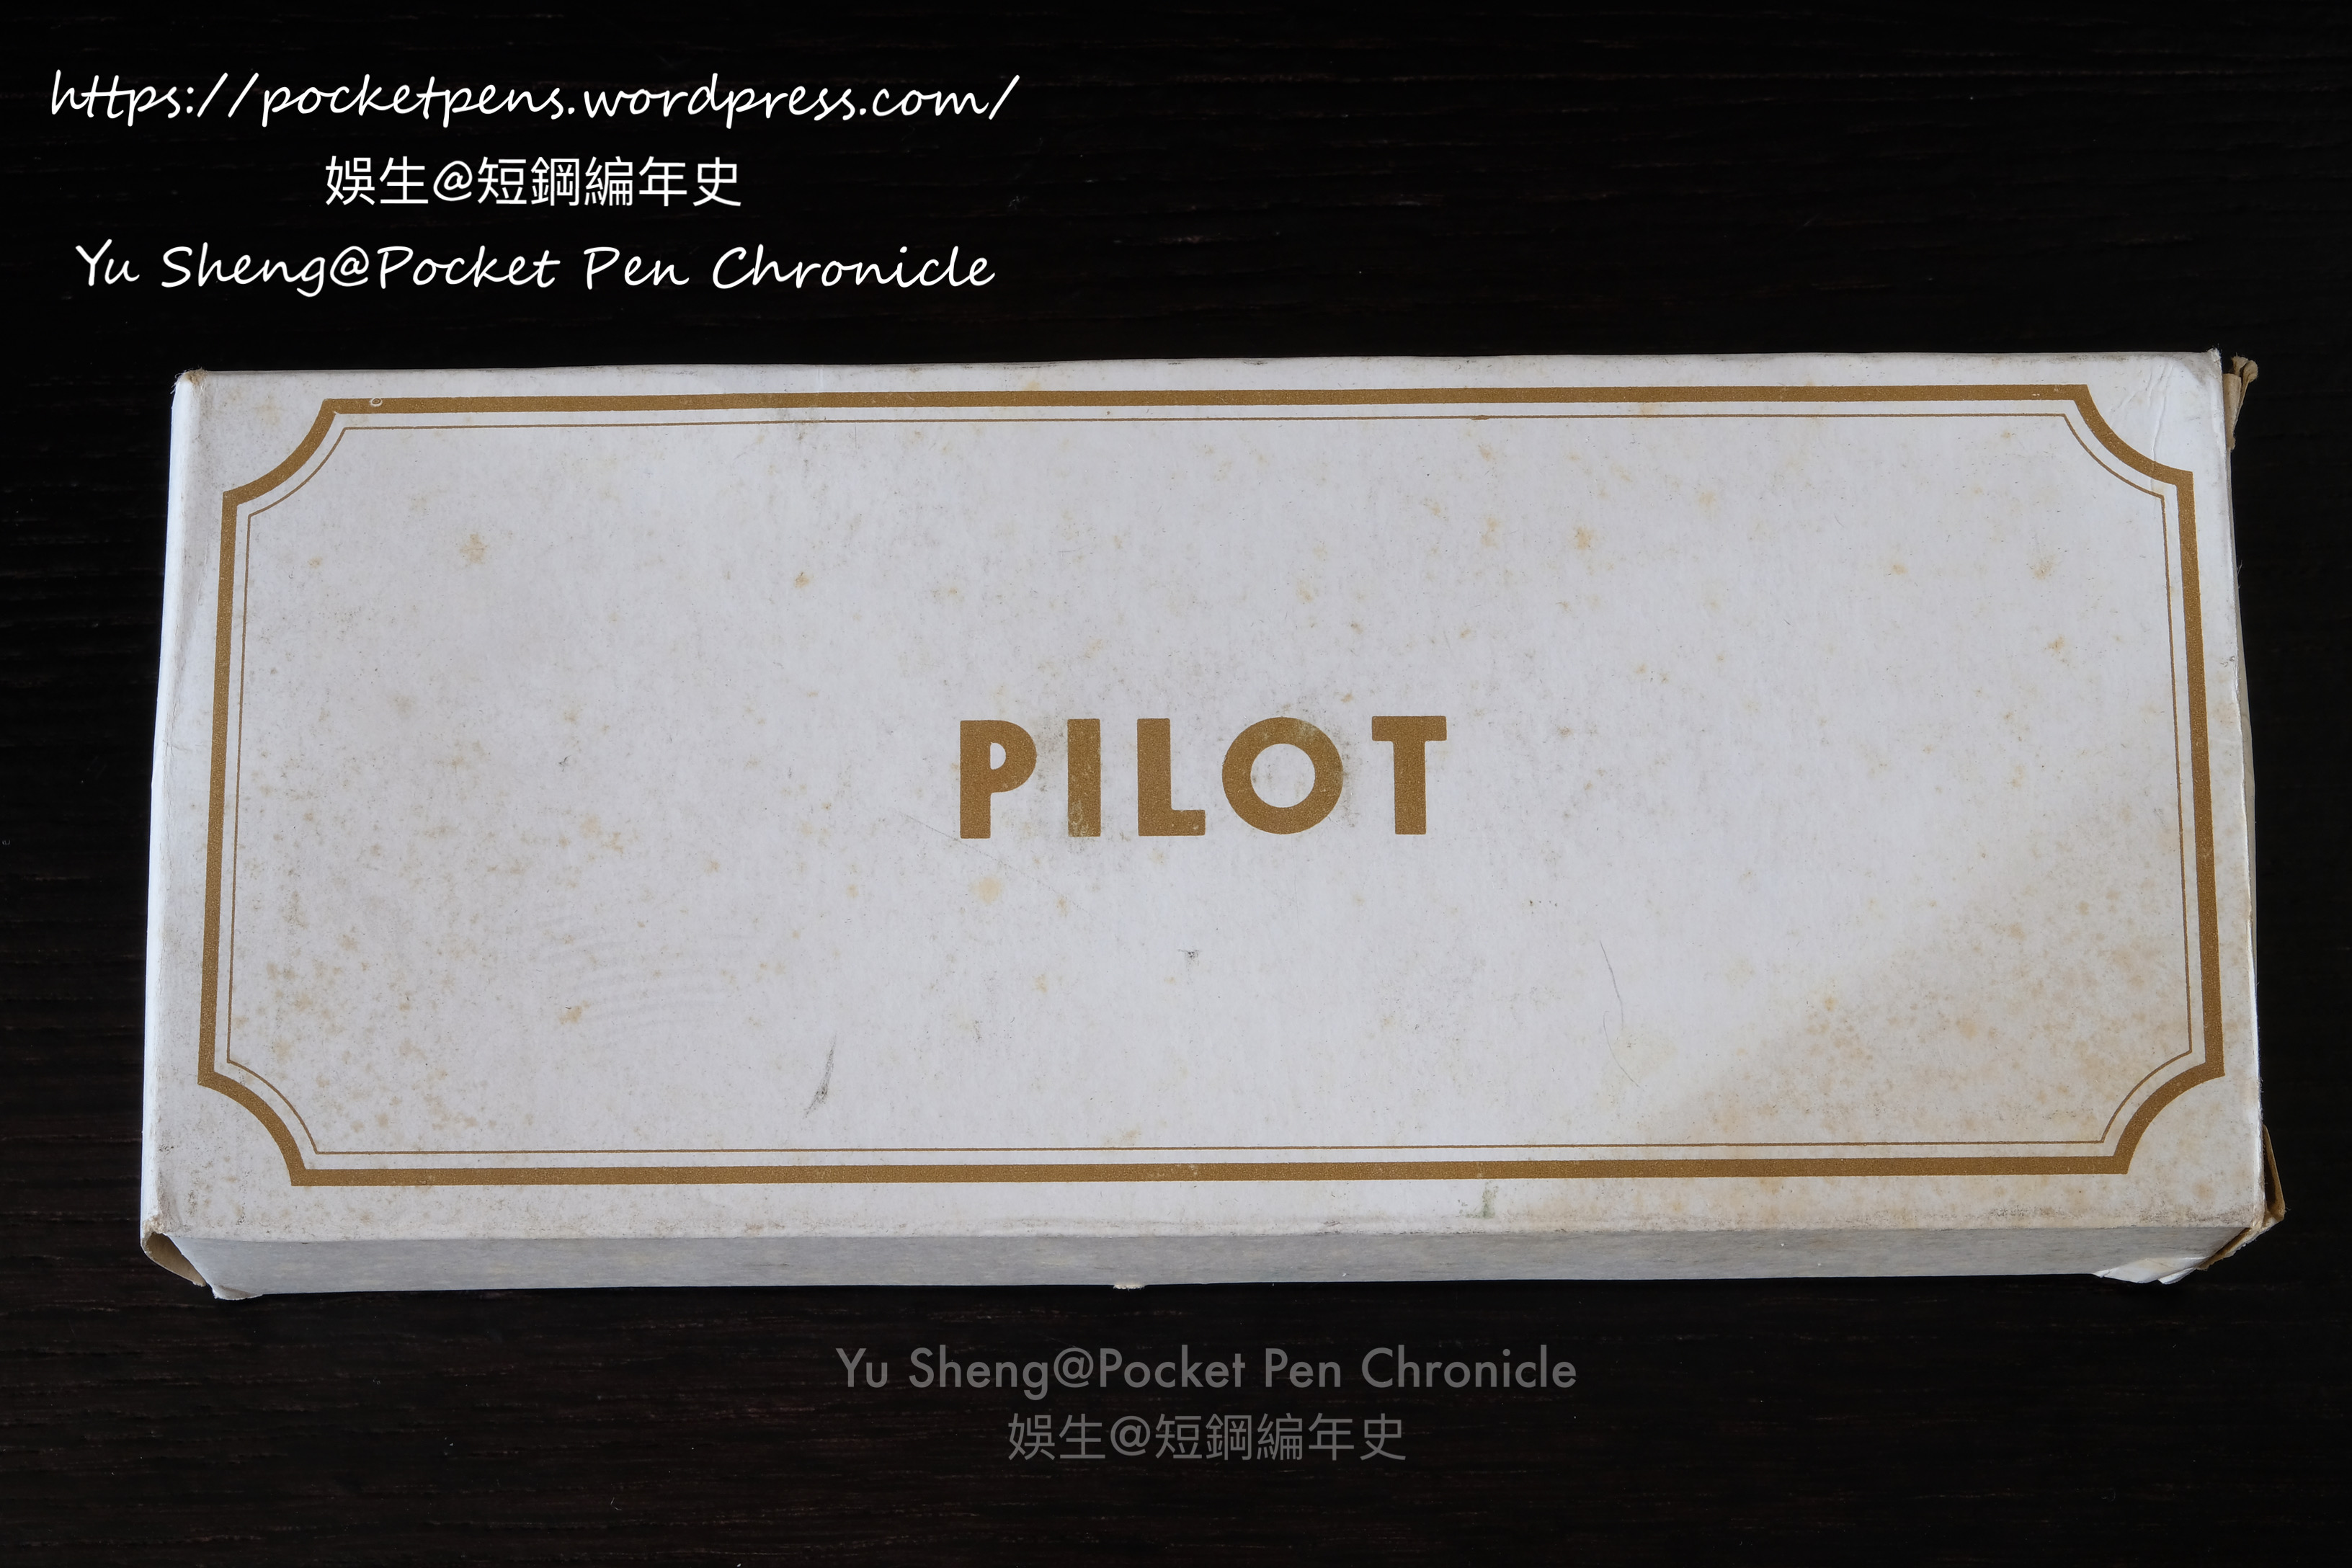 Outer packing of Pilot Elite S pocket pen